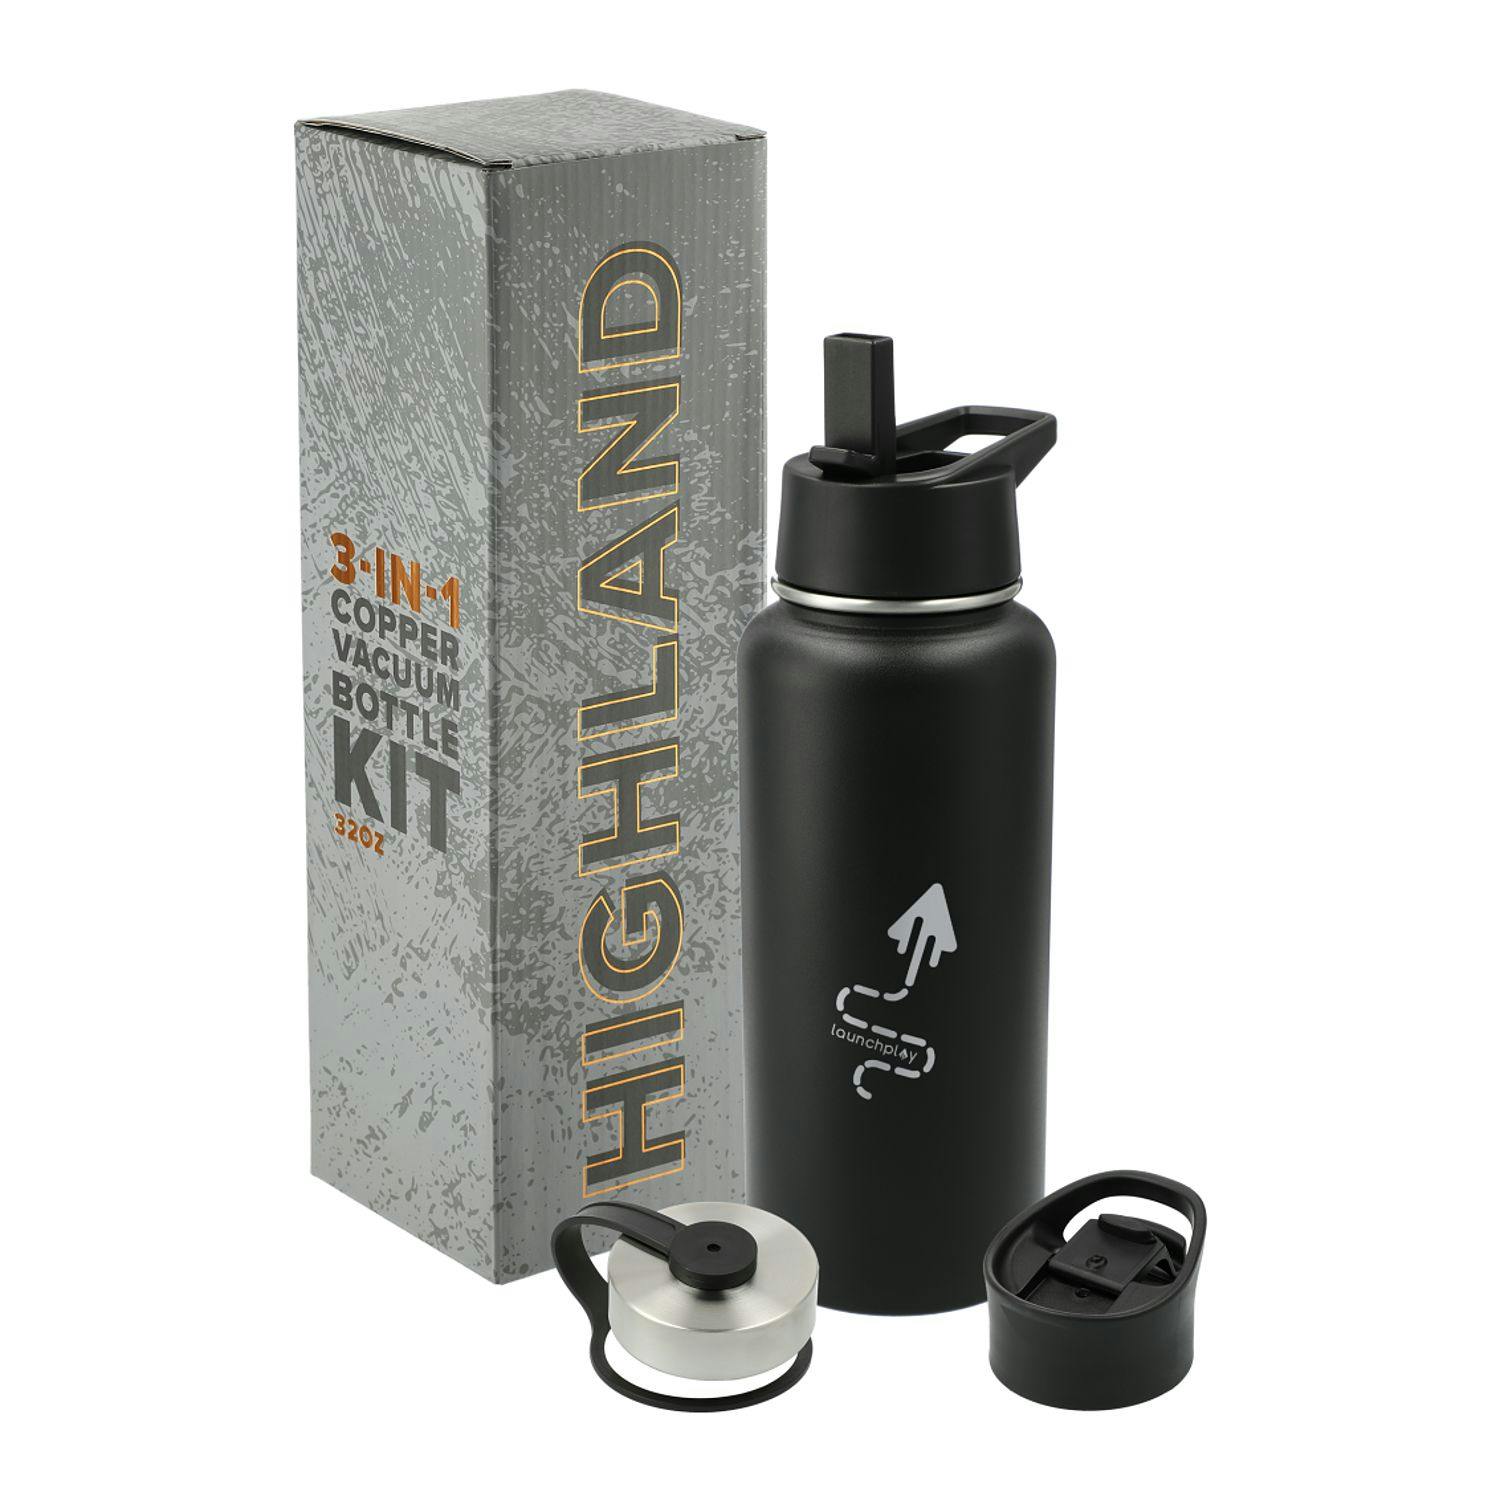 Highland 3-in-1 Copper Vacuum Bottle Kit - 32oz